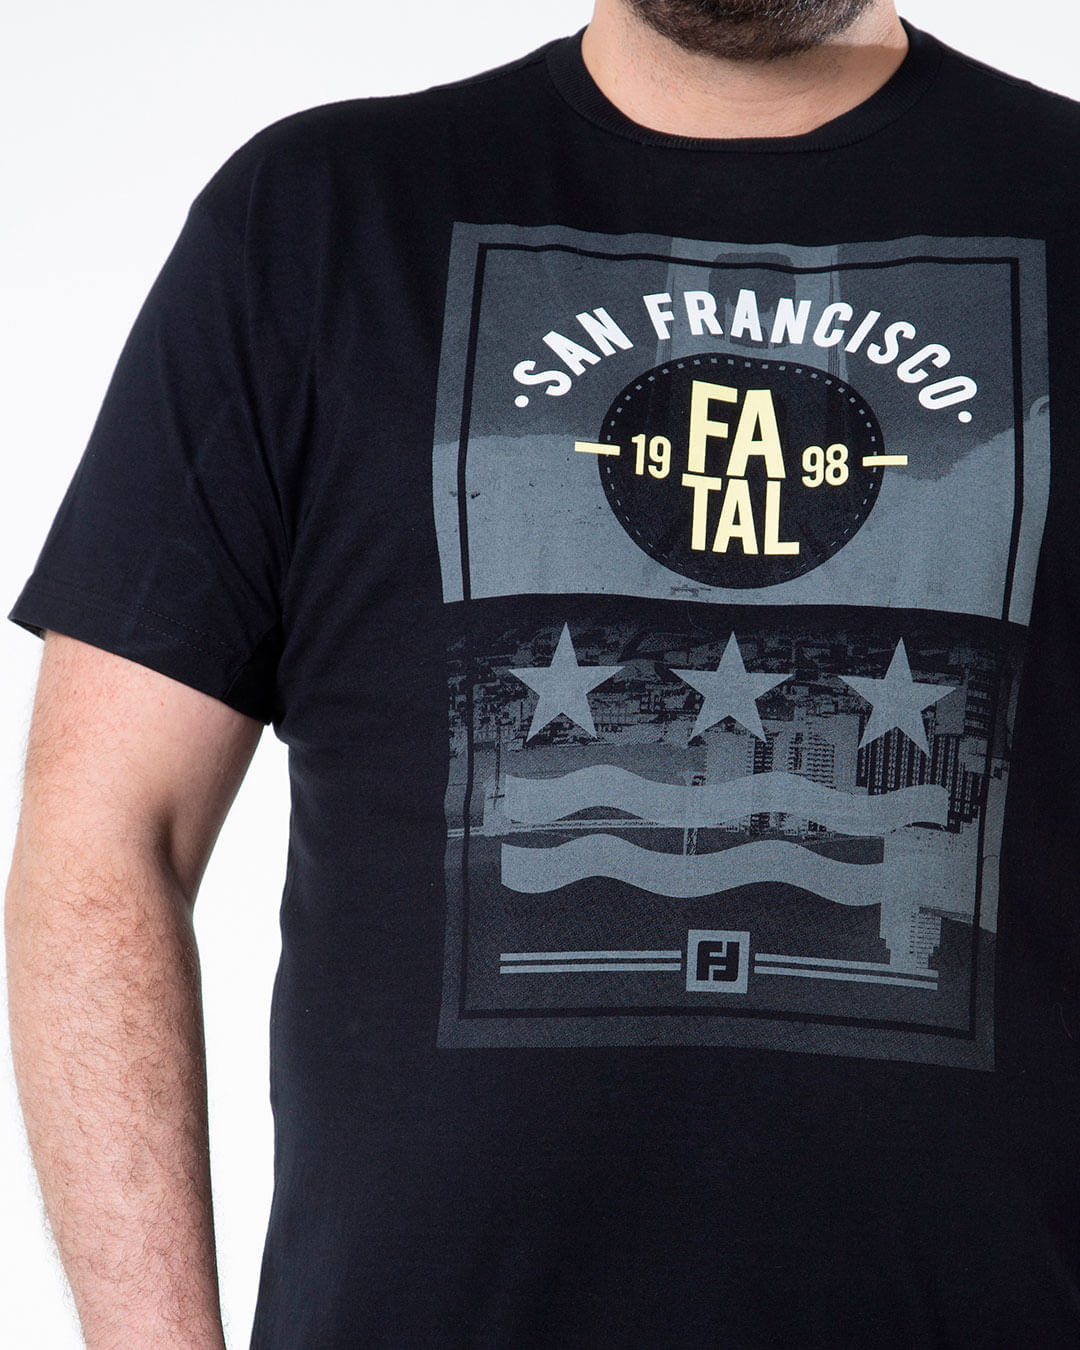 Camiseta-Masculina-Plus-Size-Estampada-San-Francisco-Fatal-Preta